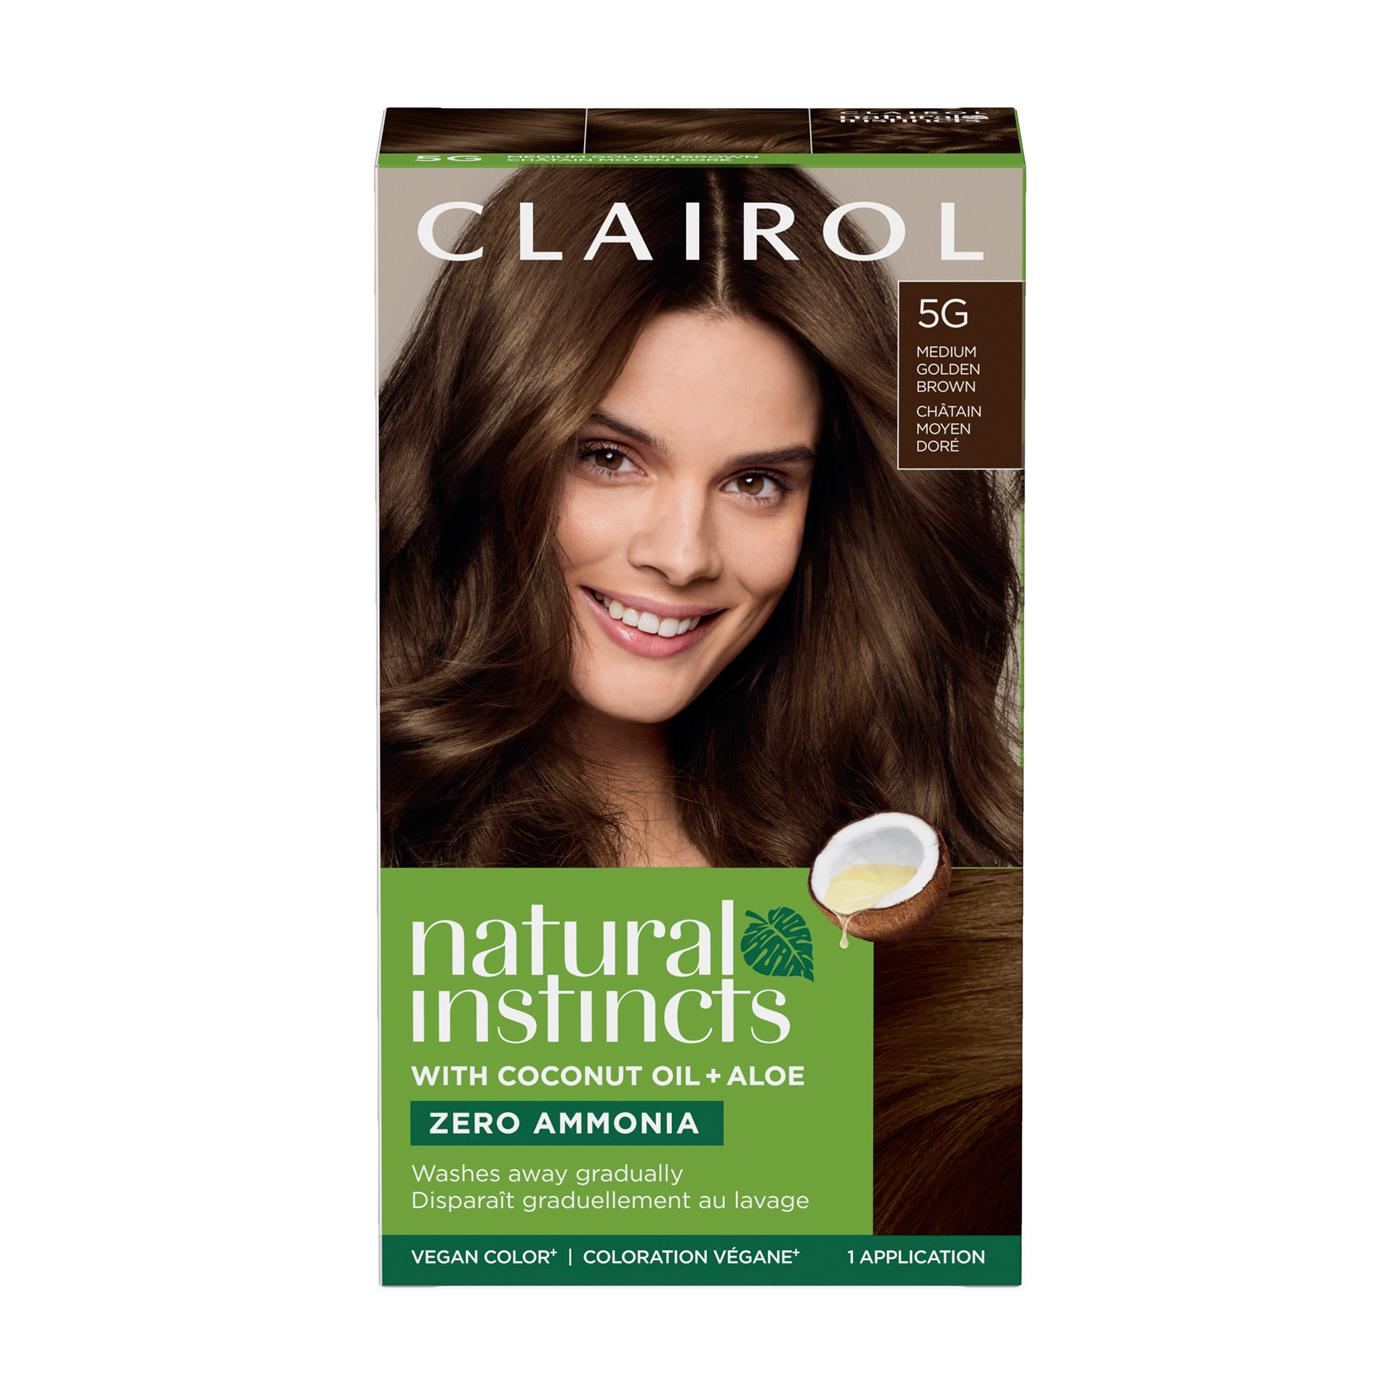 Clairol Natural Instincts Vegan Demi-Permanent Hair Color - 5G Medium Golden Brown; image 1 of 10